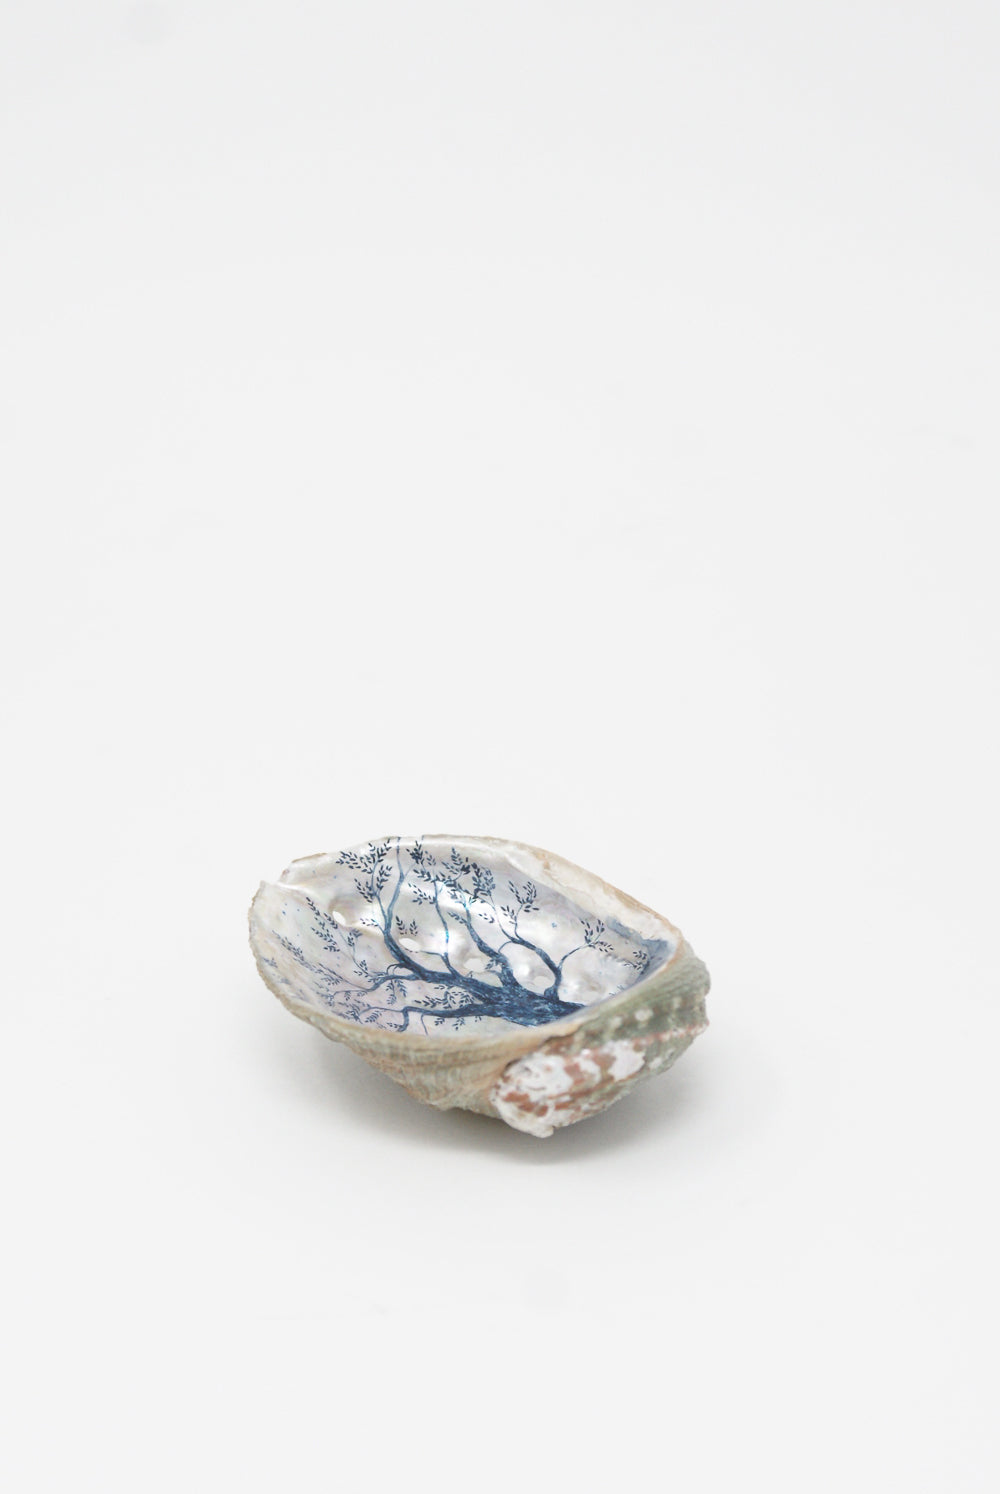 Alyssa Goodman - Hand Painted Shell in Views side